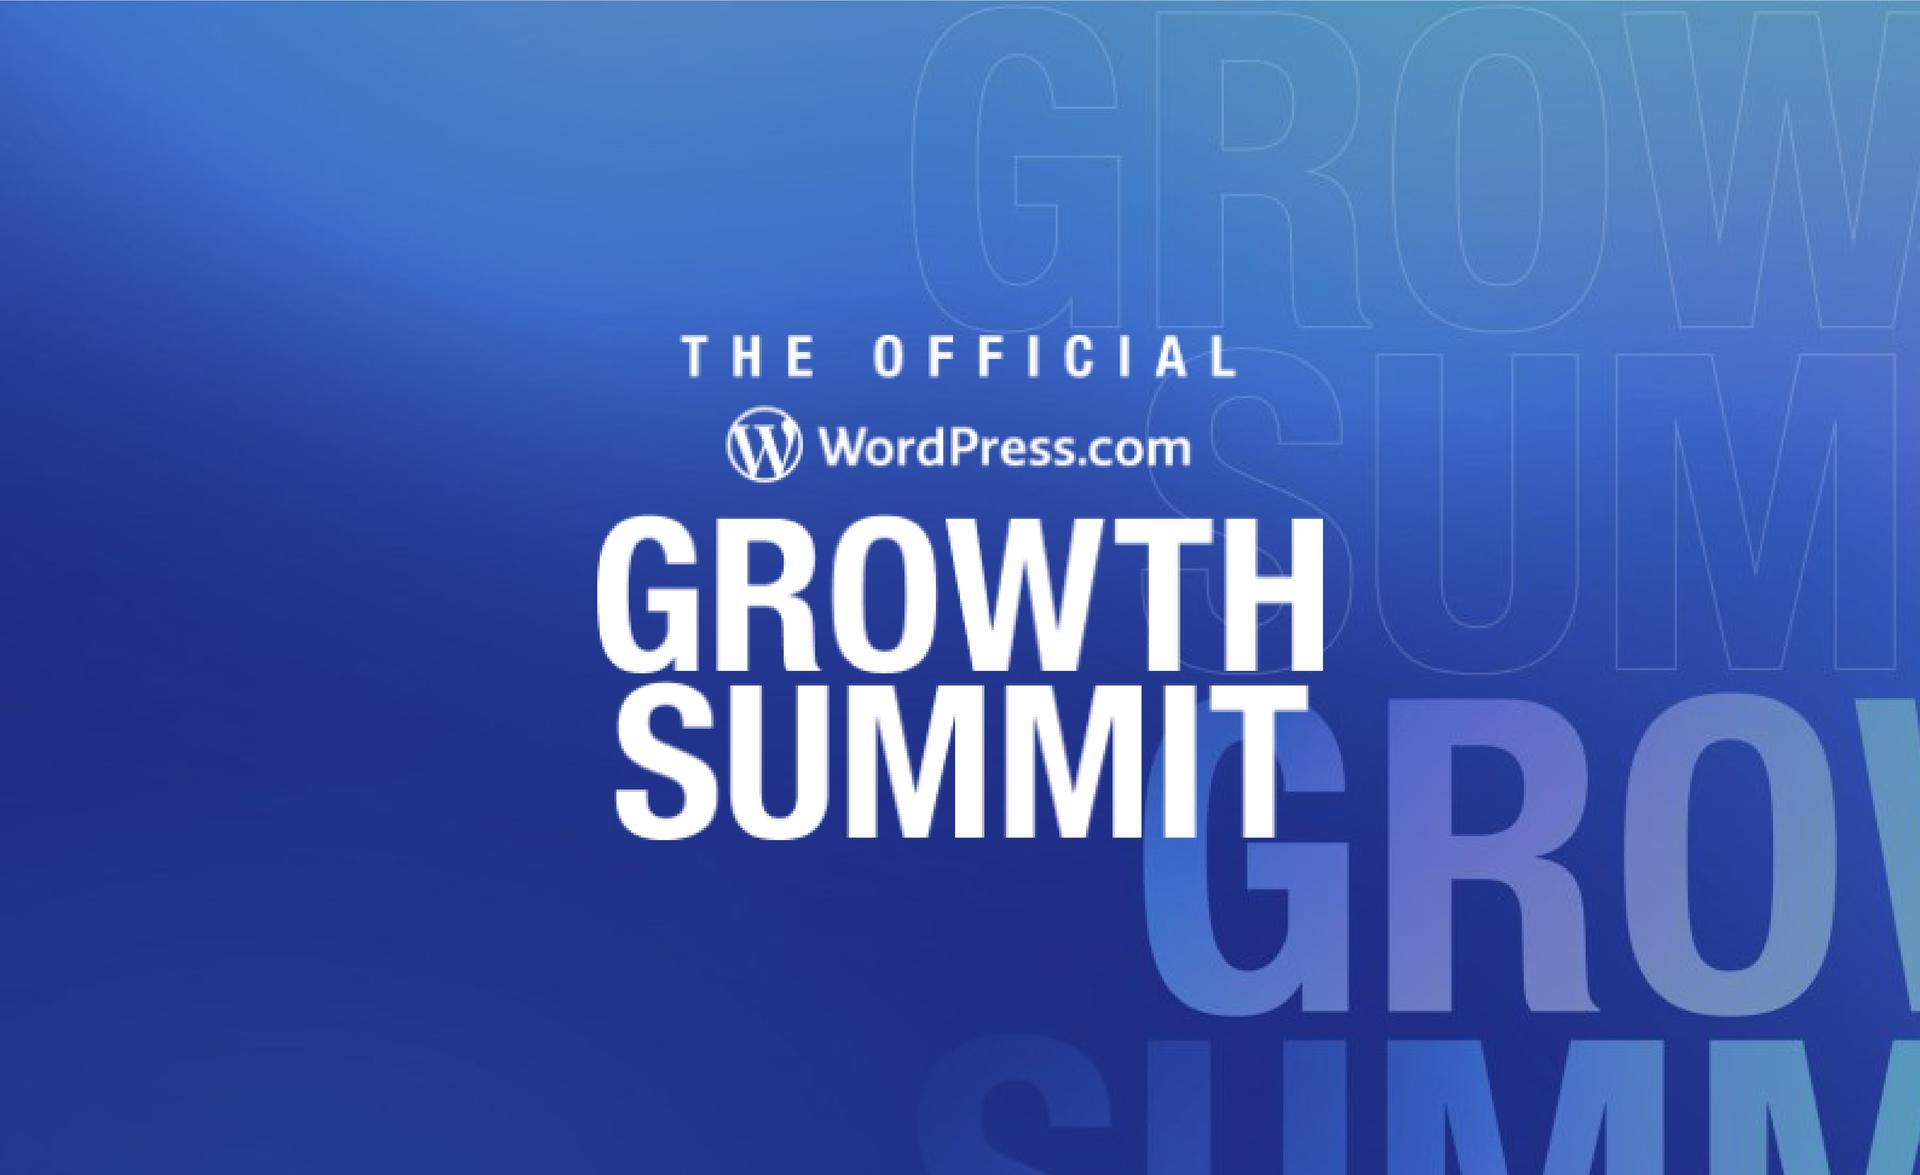 Expert Advice From the WordPress.com Growth Summit 2021